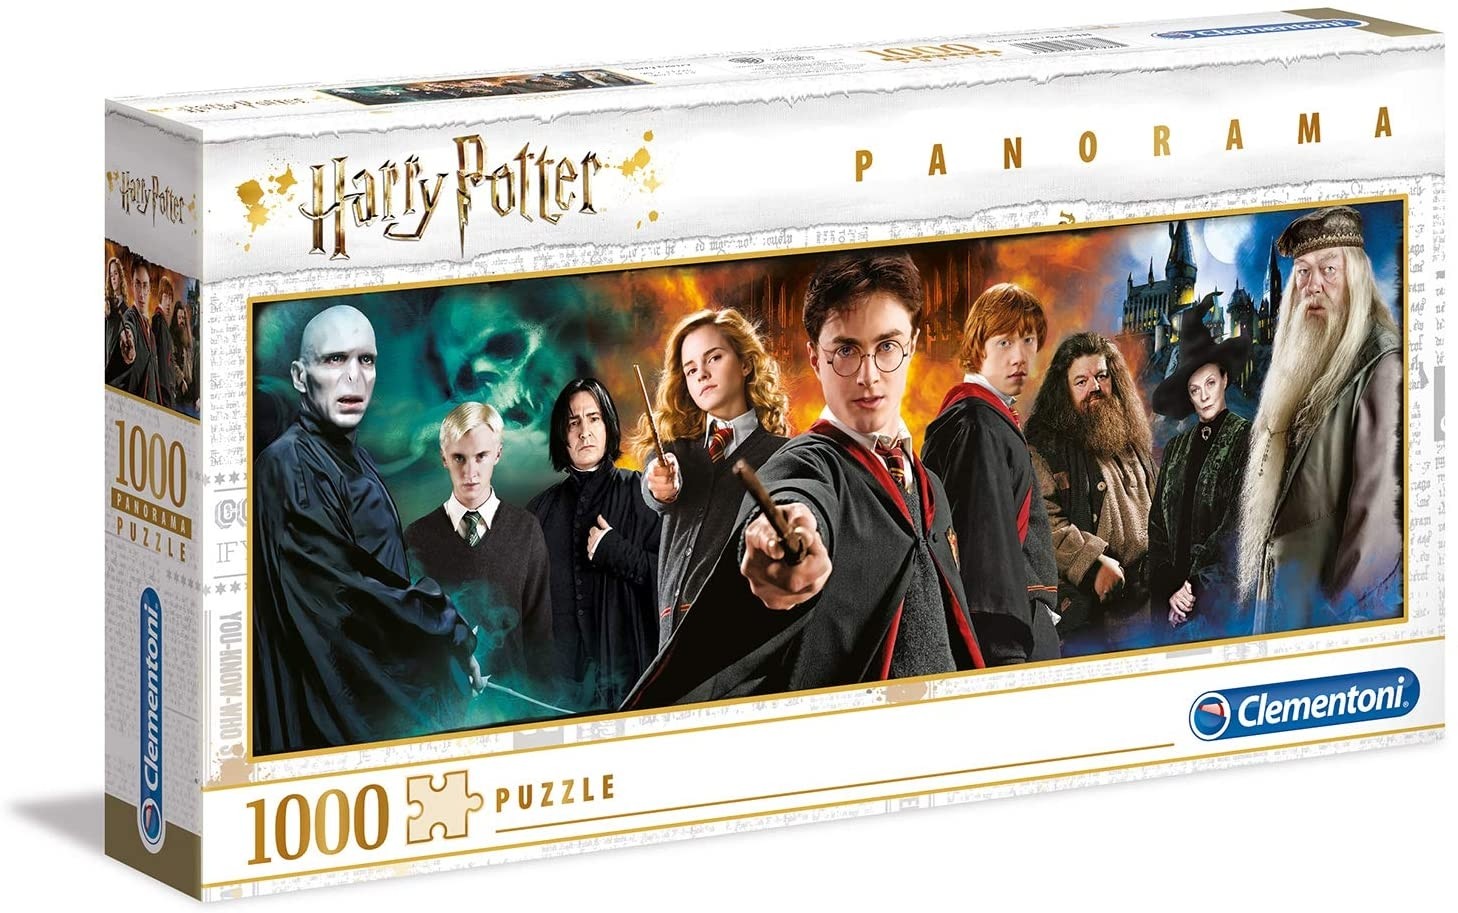 Puzzle Panorama  Harry Potter 1000 pezzi Clementoni